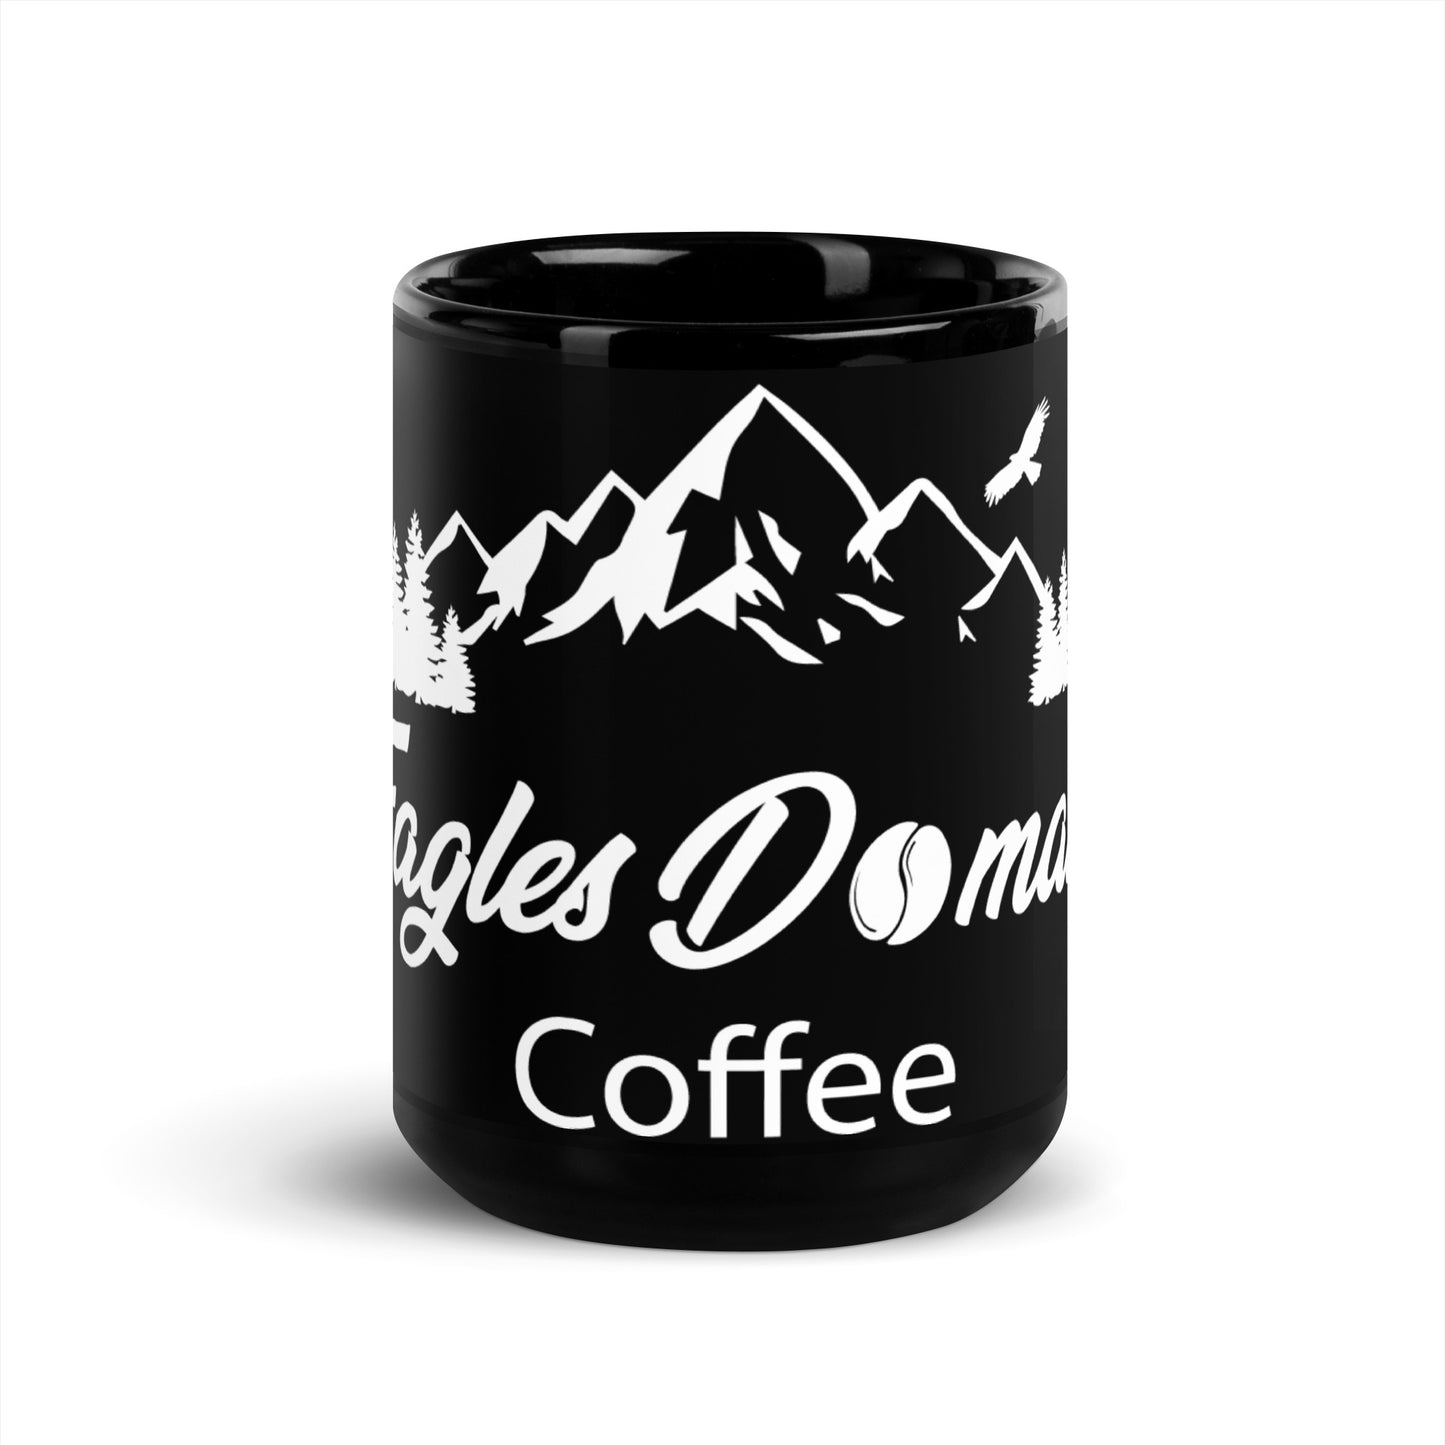 Eagles Domain Coffee Black Glossy Mug - Eagles Domain Coffee